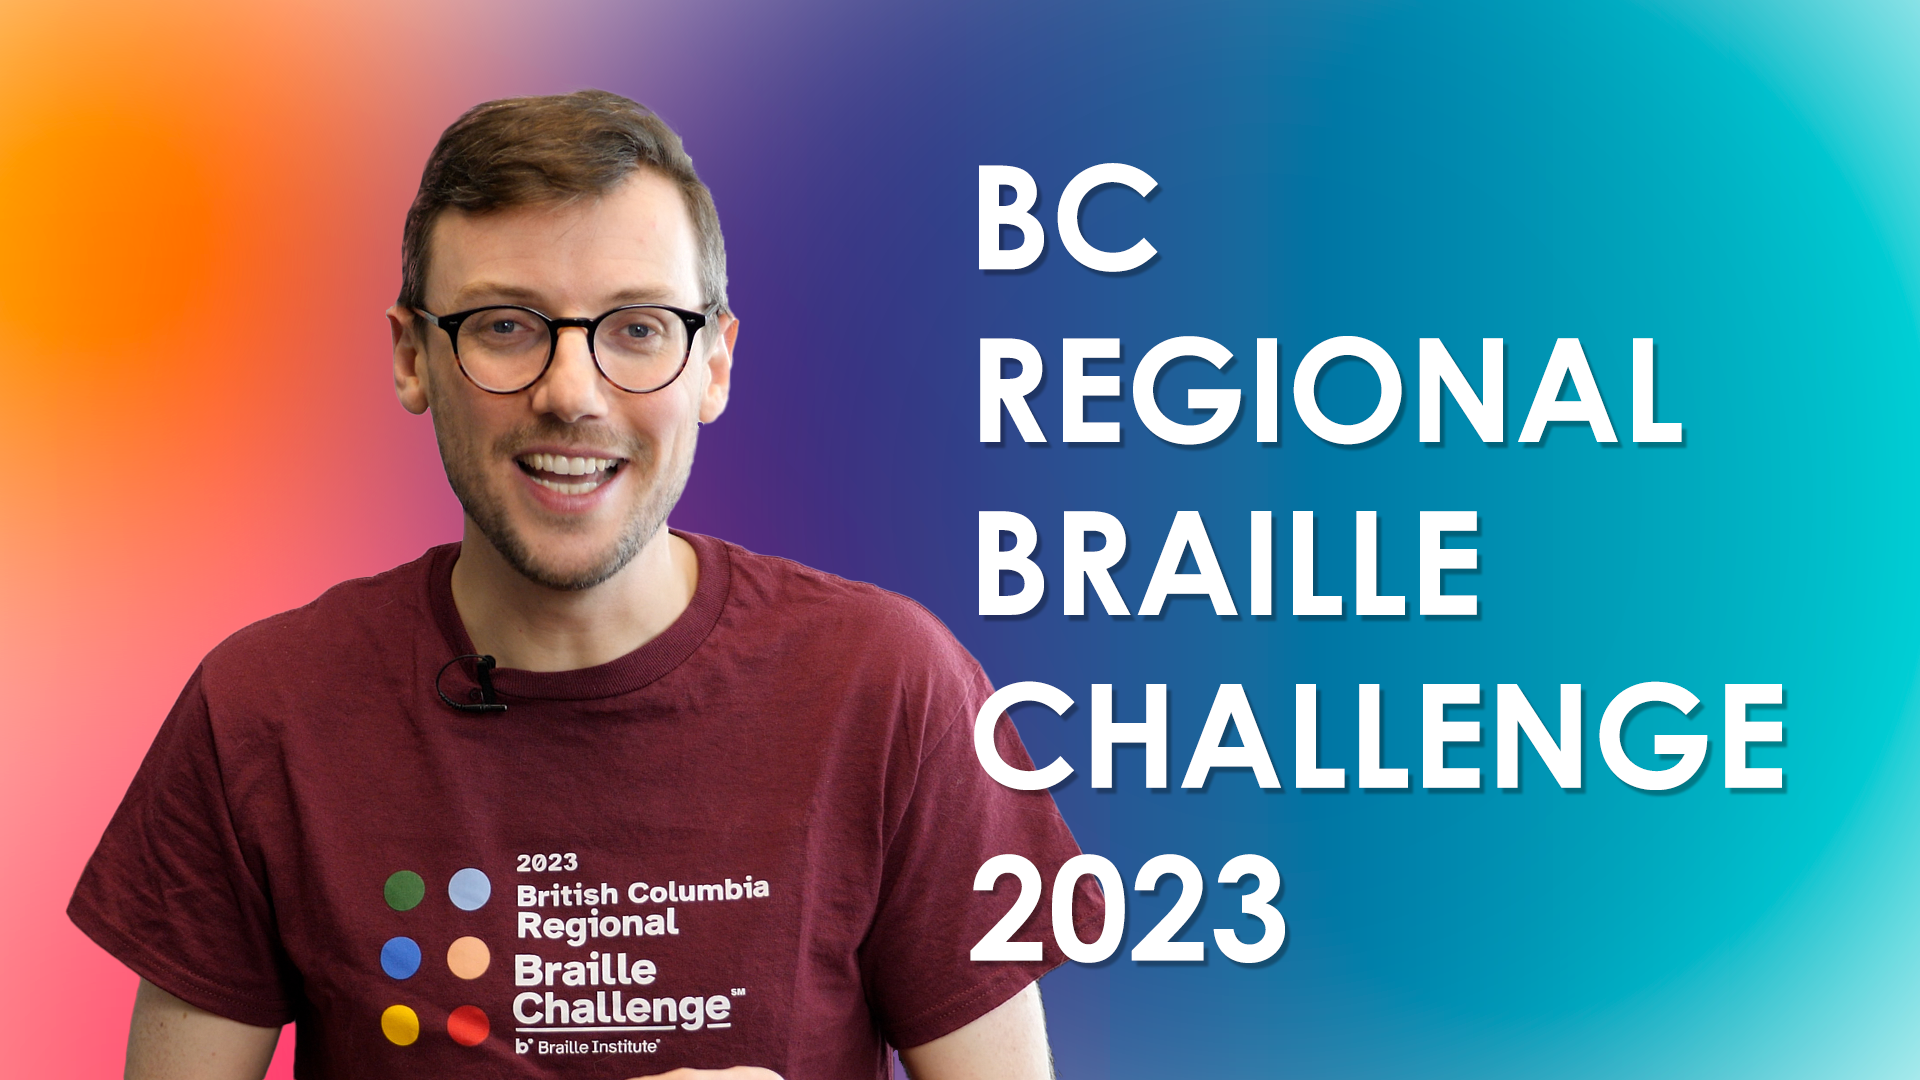 Adam smiles while wearing a burgundy Braille Challenge t-shirt. Caption reads: BC Regional Braille Challenge 2023